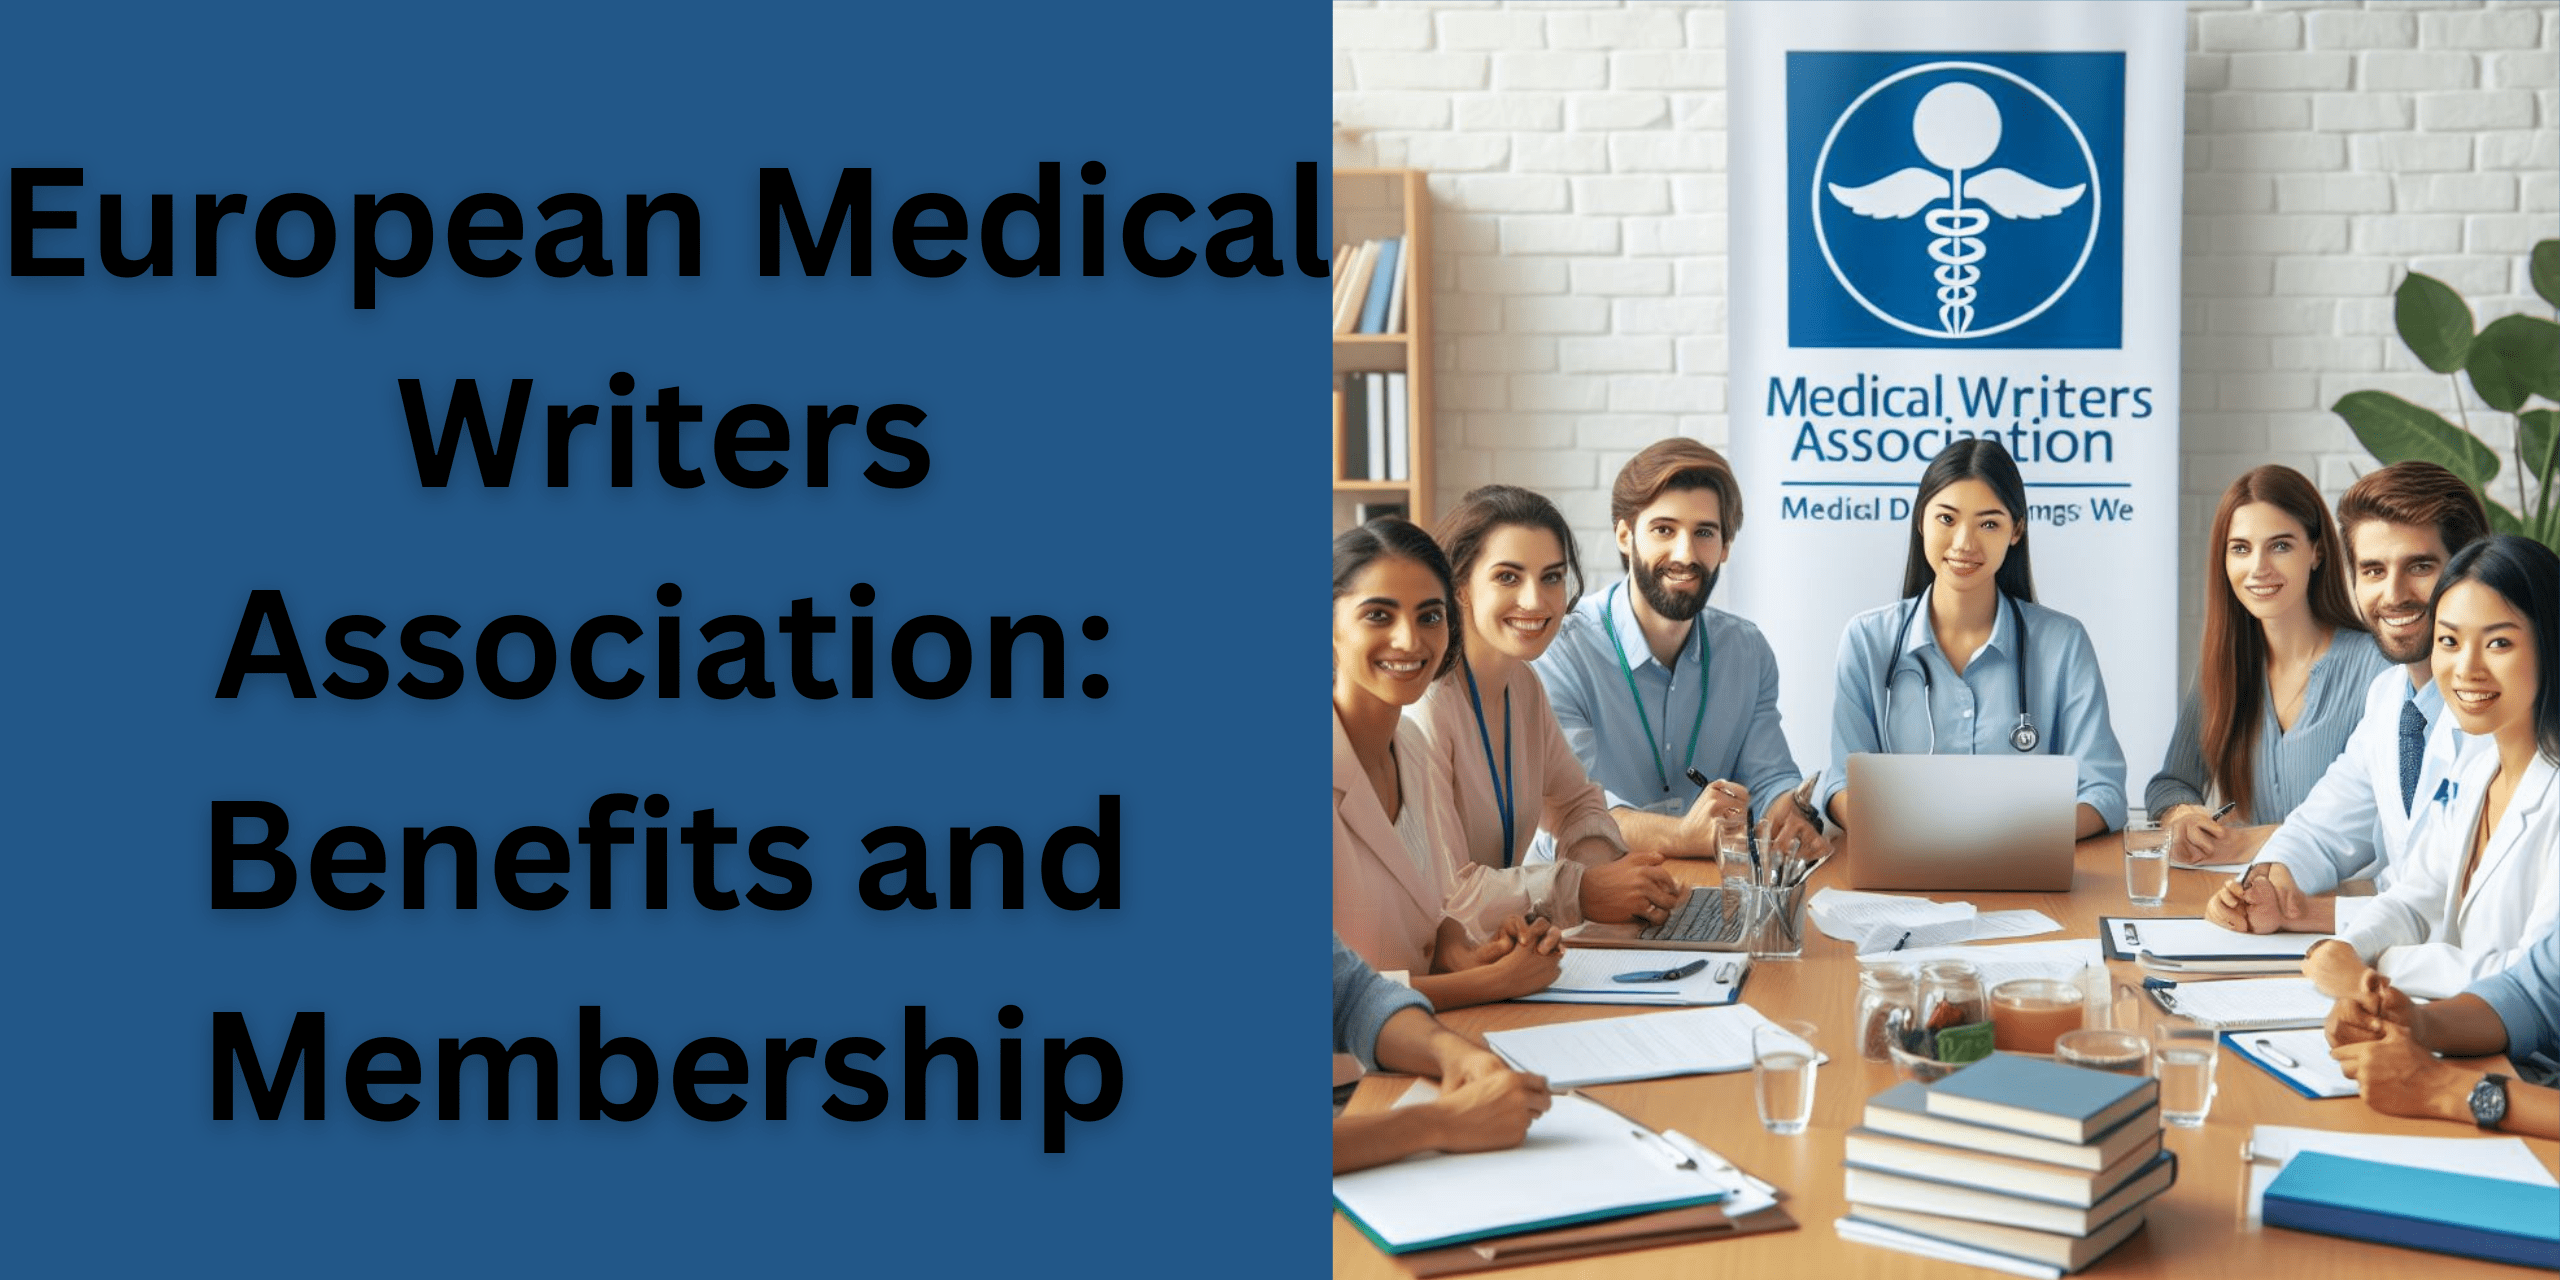 alt="European Medical Writers Association: Benefits and Membership"